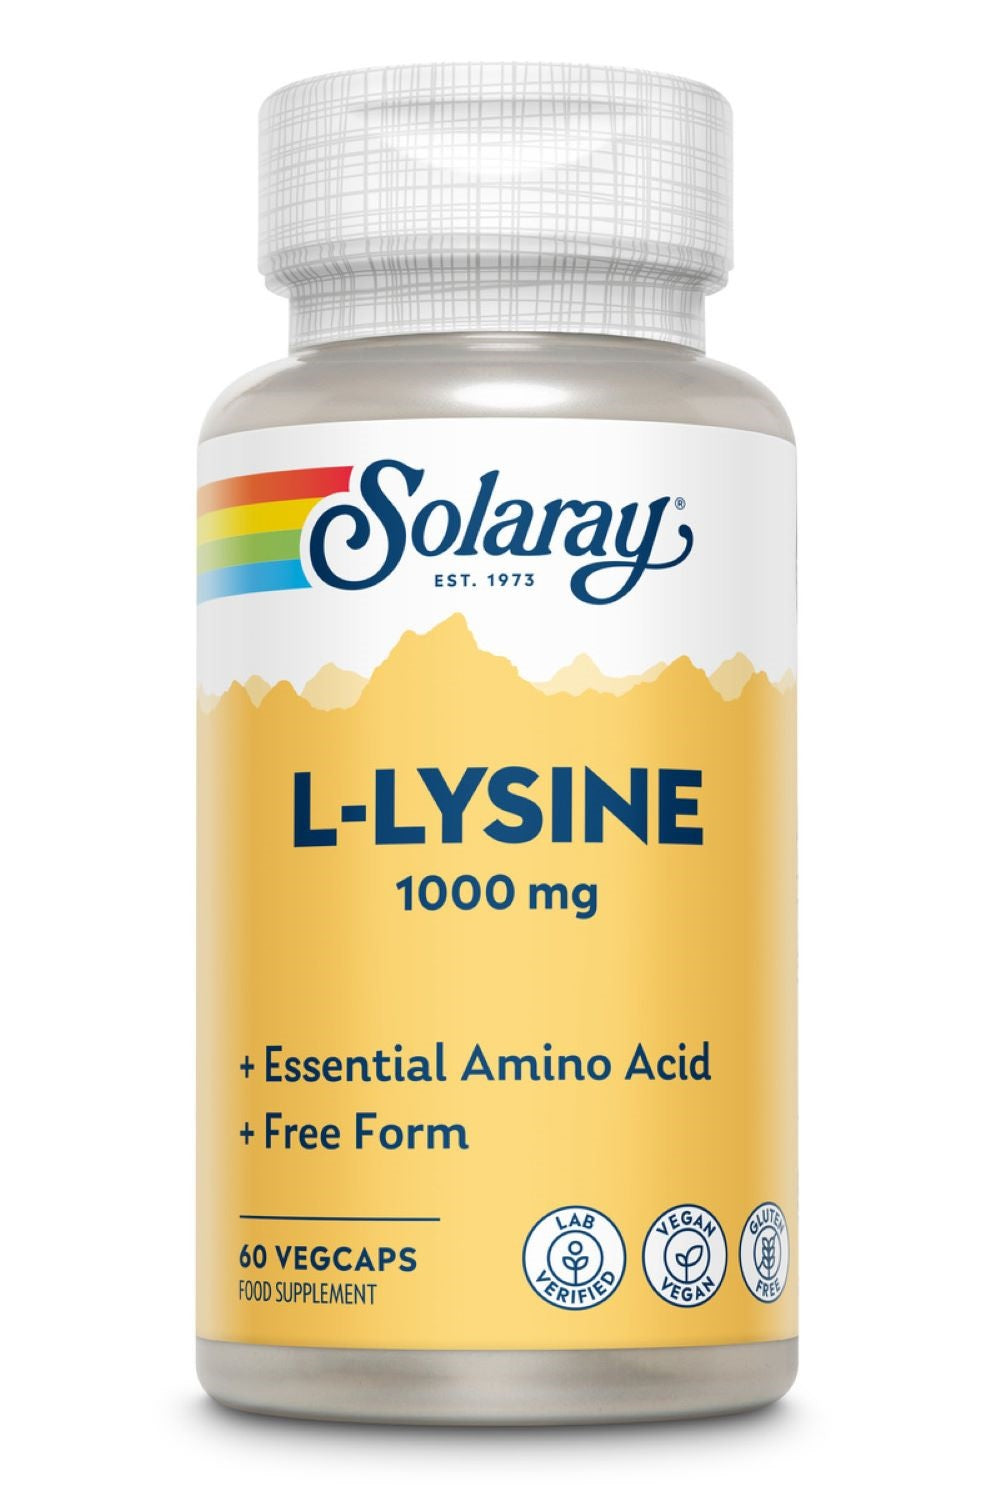 Solaray L-Lysine 1000mg, 60 Capsules